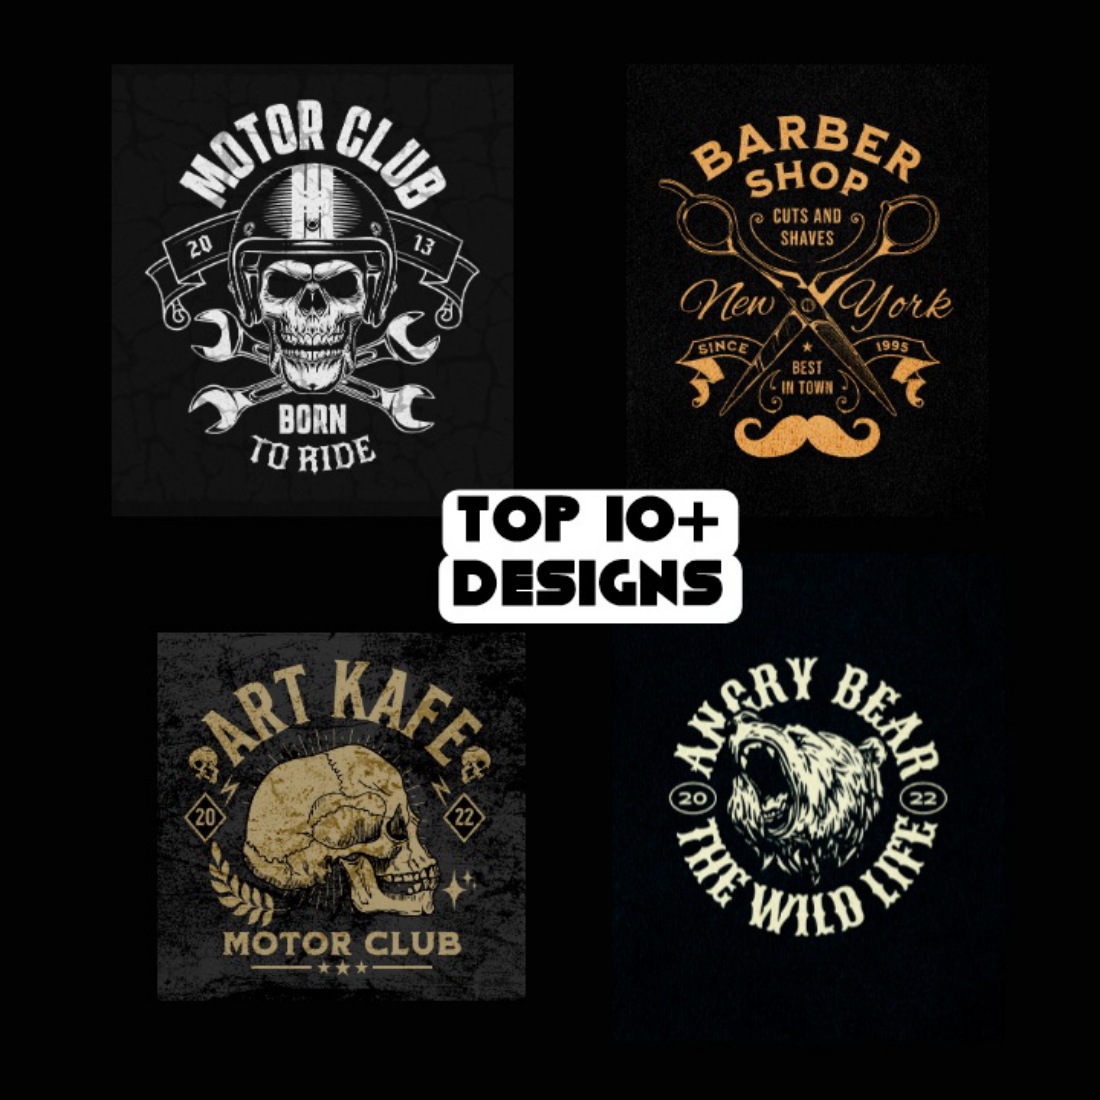 Top 10+ vintage t shirts designs preview image.